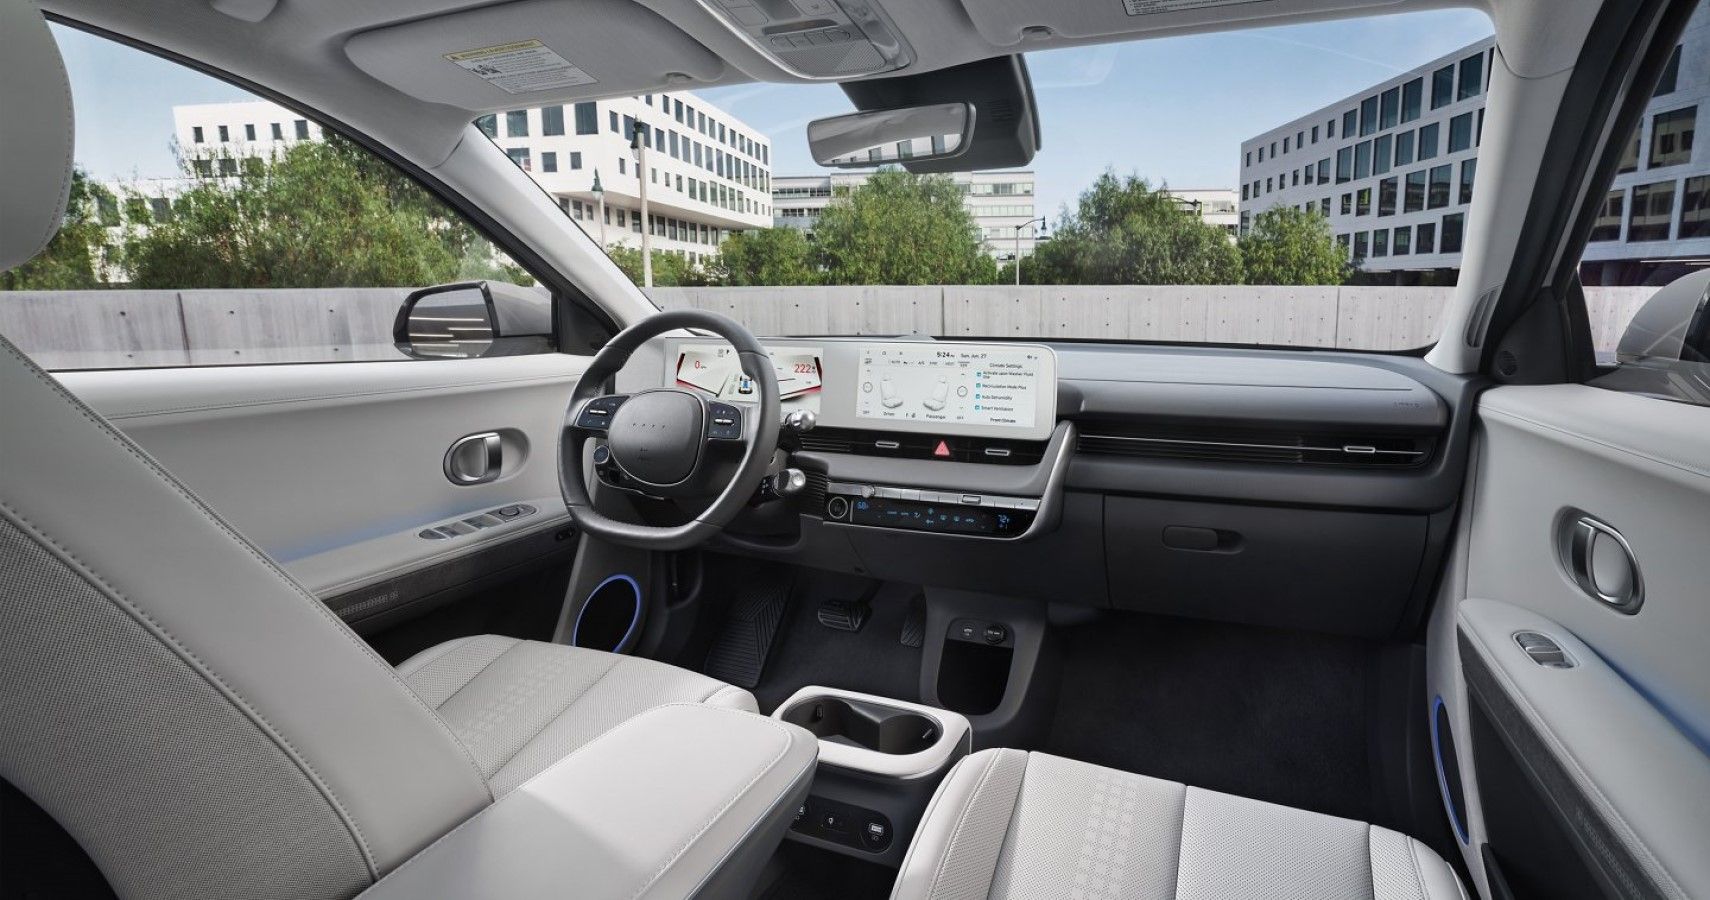 2022 Hyundai Ioniq 5 interior view